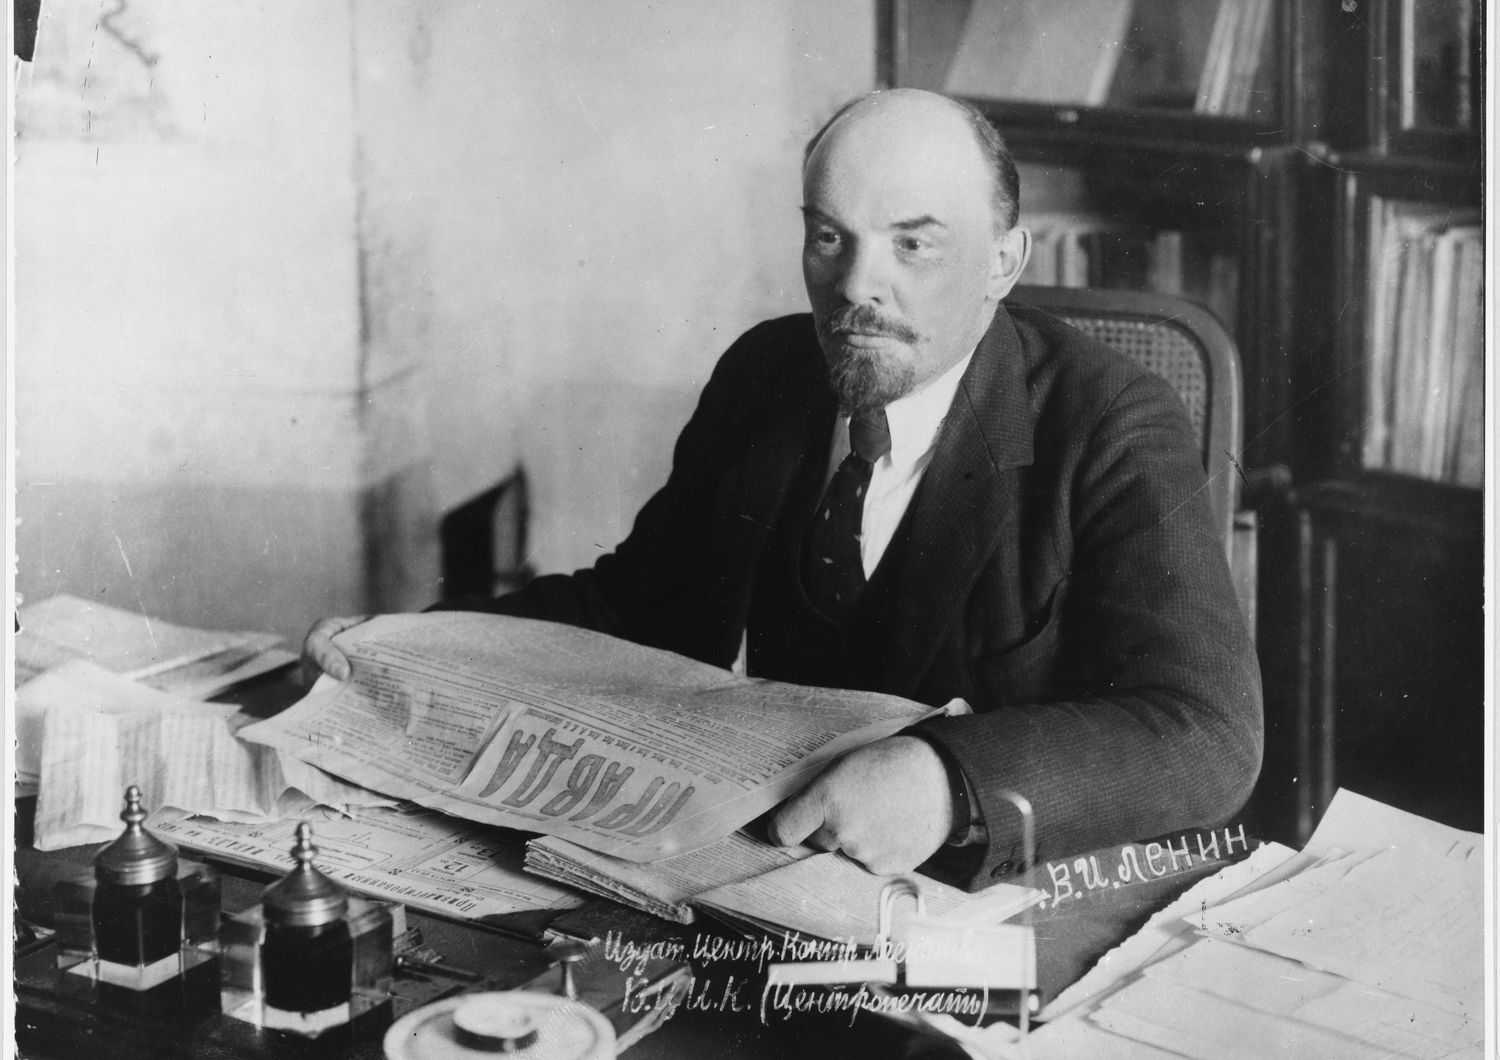 Lenin legge una copia della Pravda